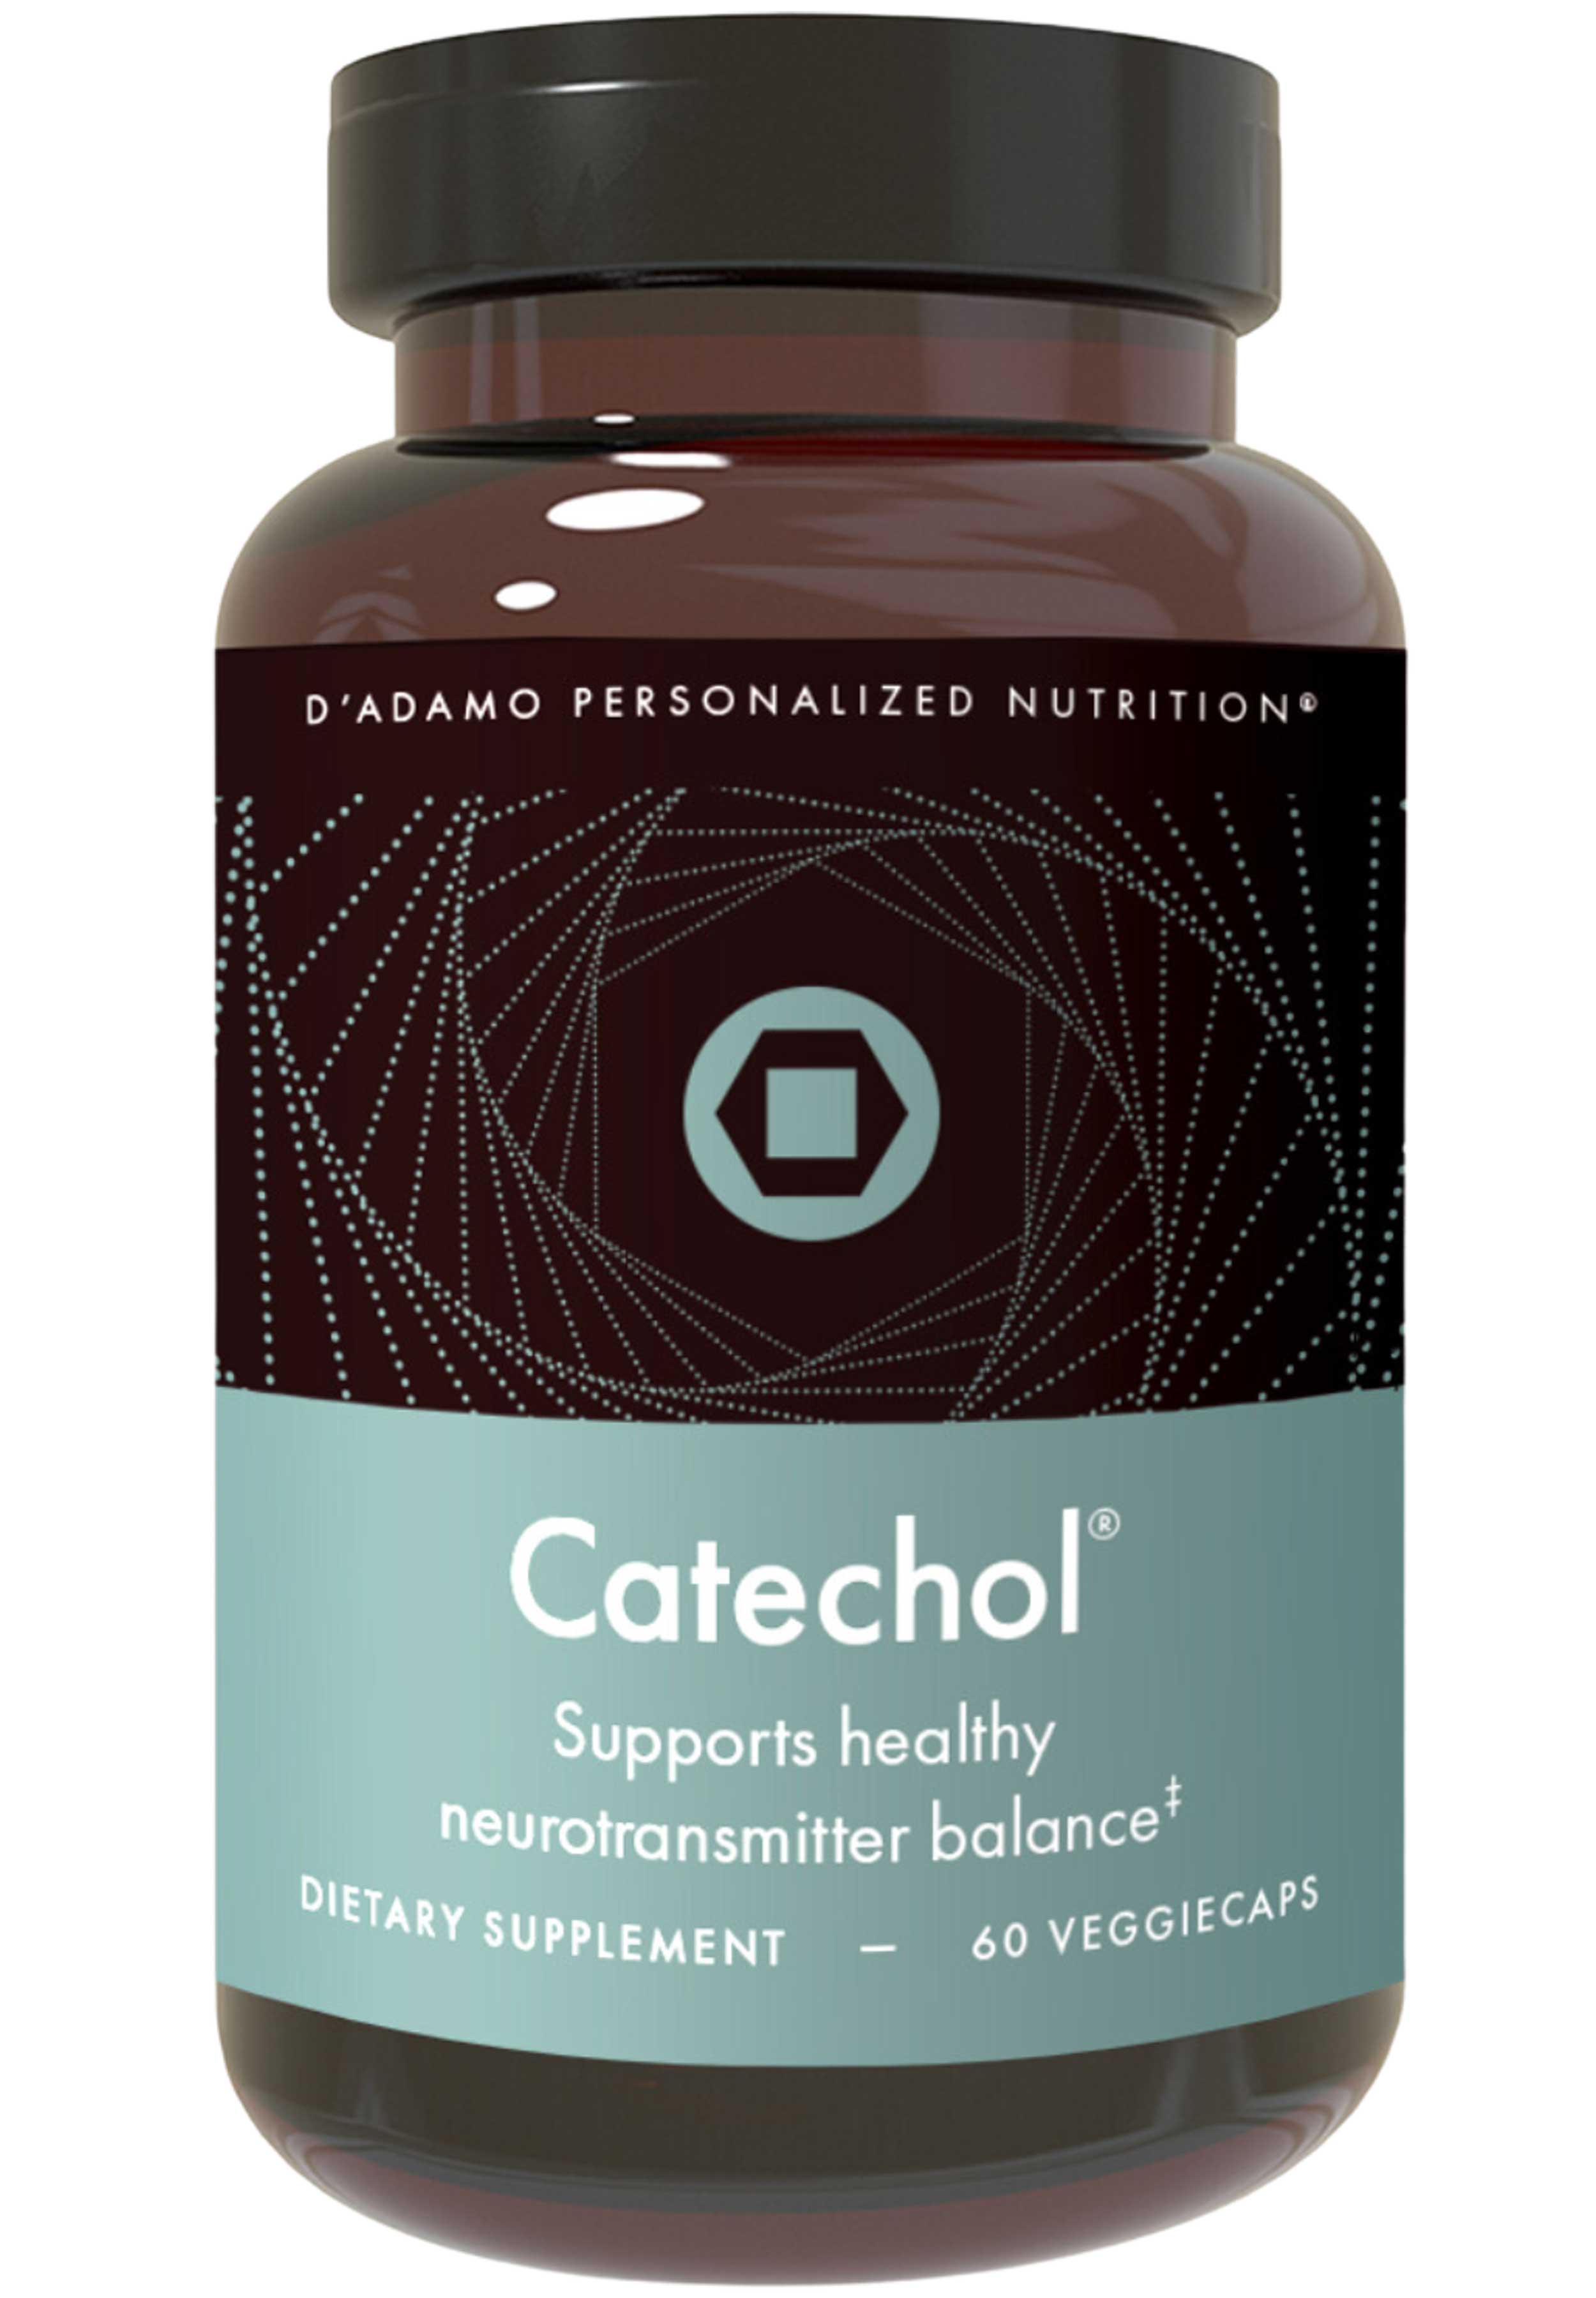 D'Adamo Personalized Nutrition Catechol